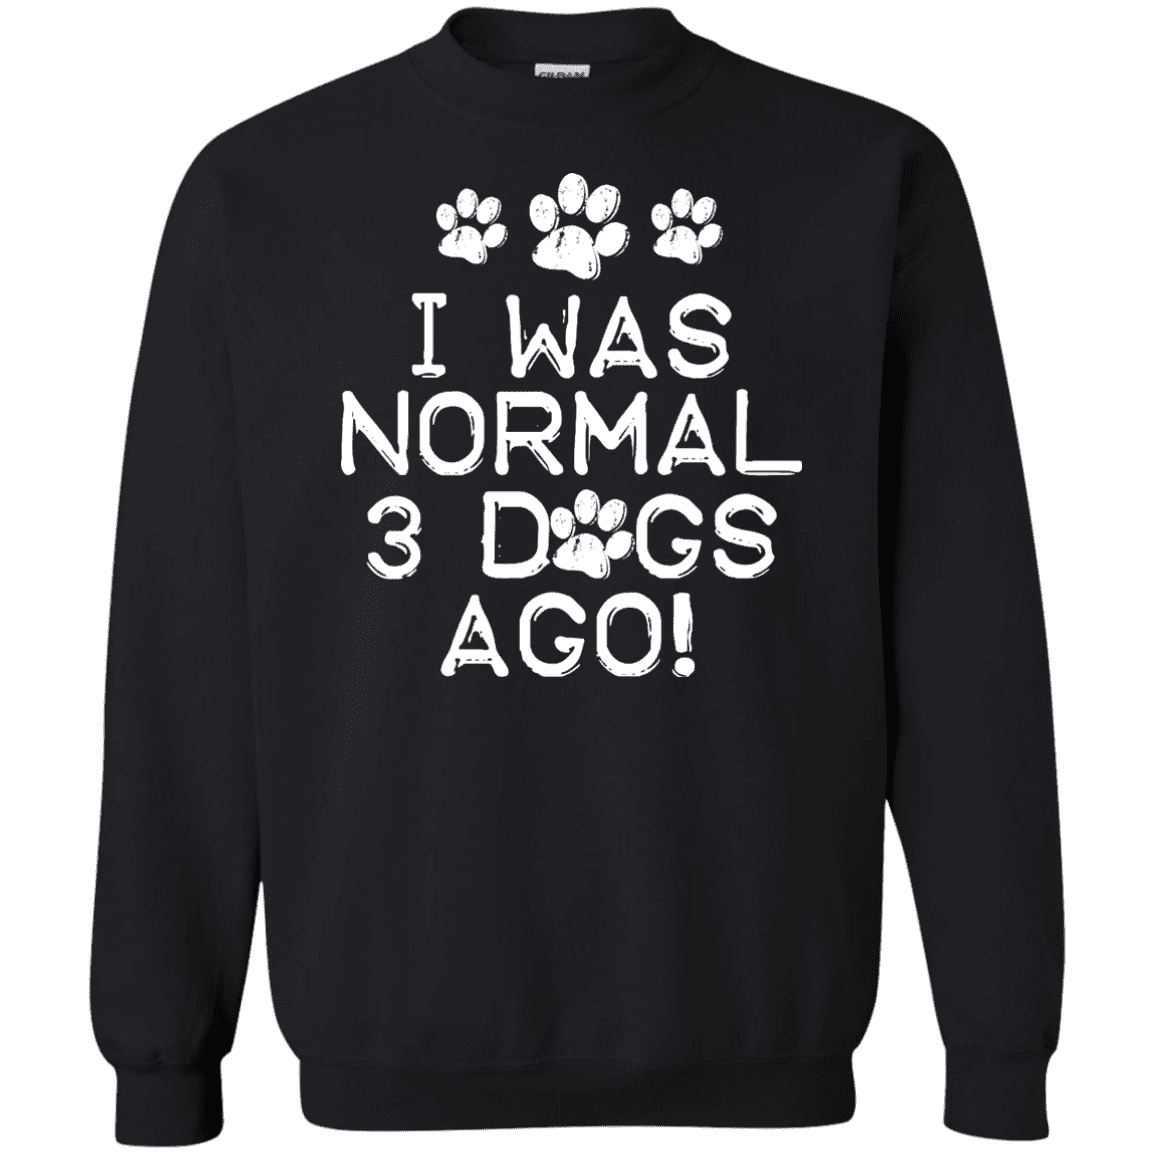 I Was Normal Dogs - Sweatshirt.